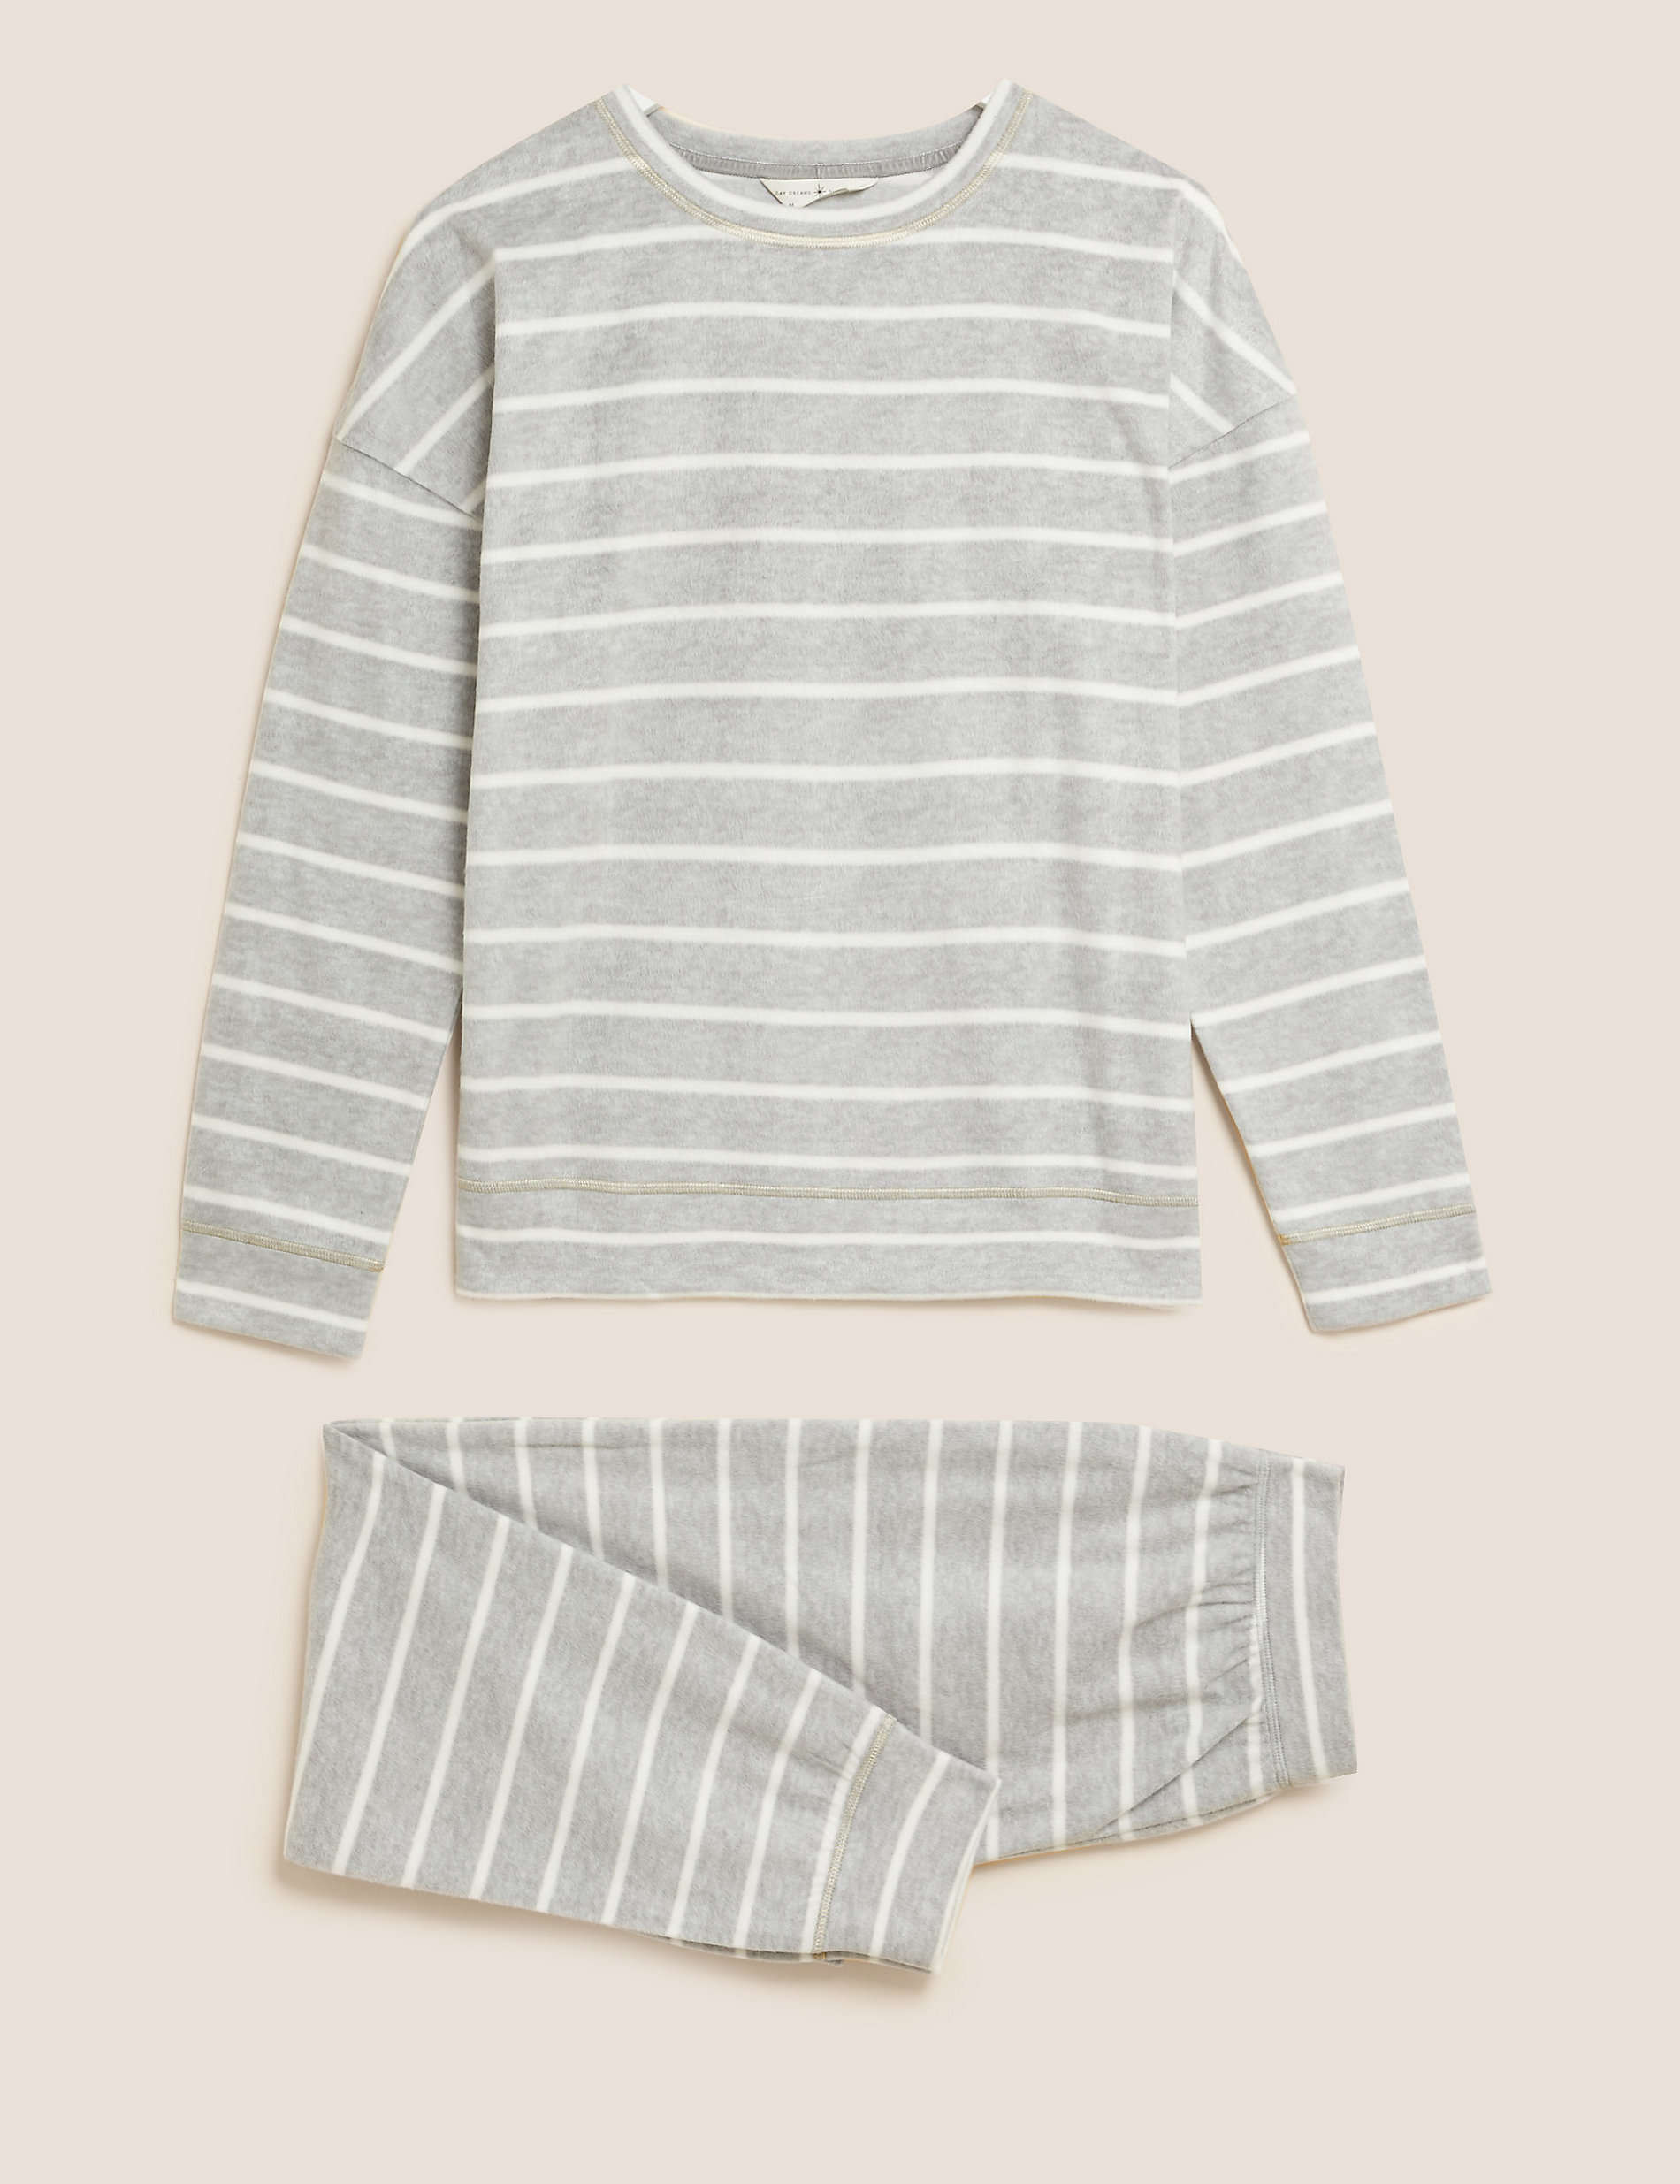 Fleece Striped Pyjama Set